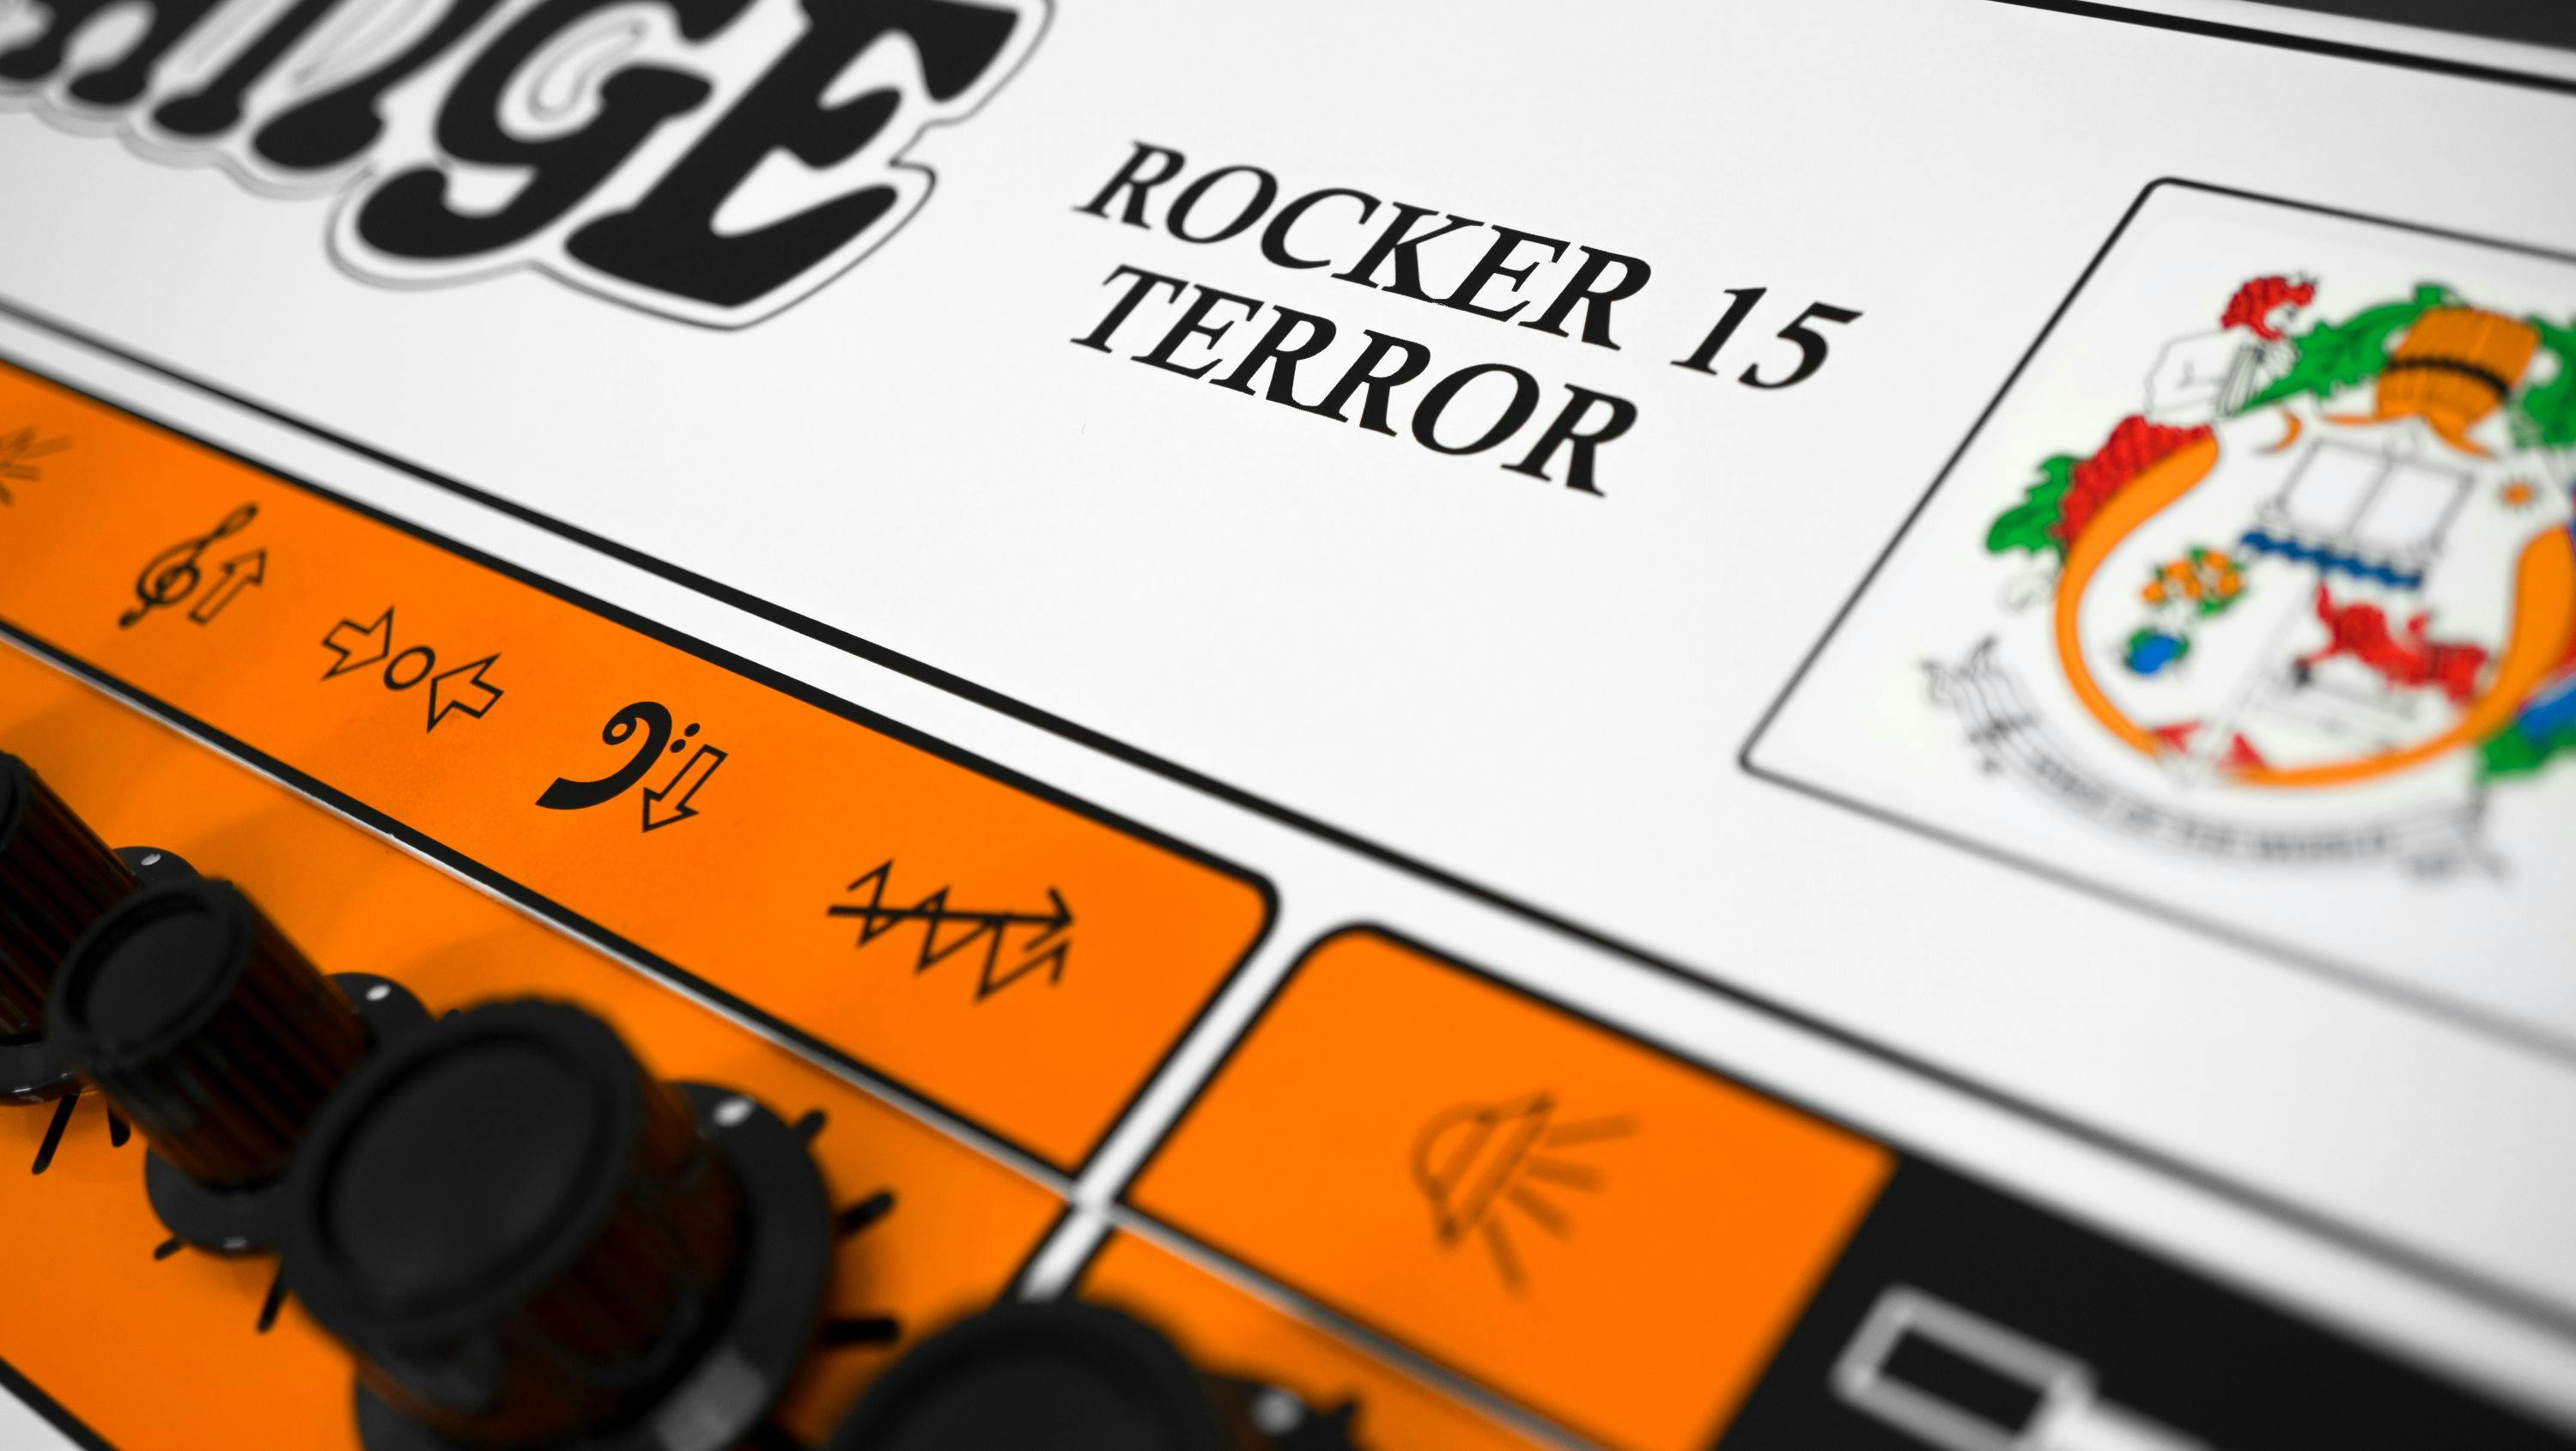 Orange Rocker 15W Terror Guitar Head - Andertons Music Co.